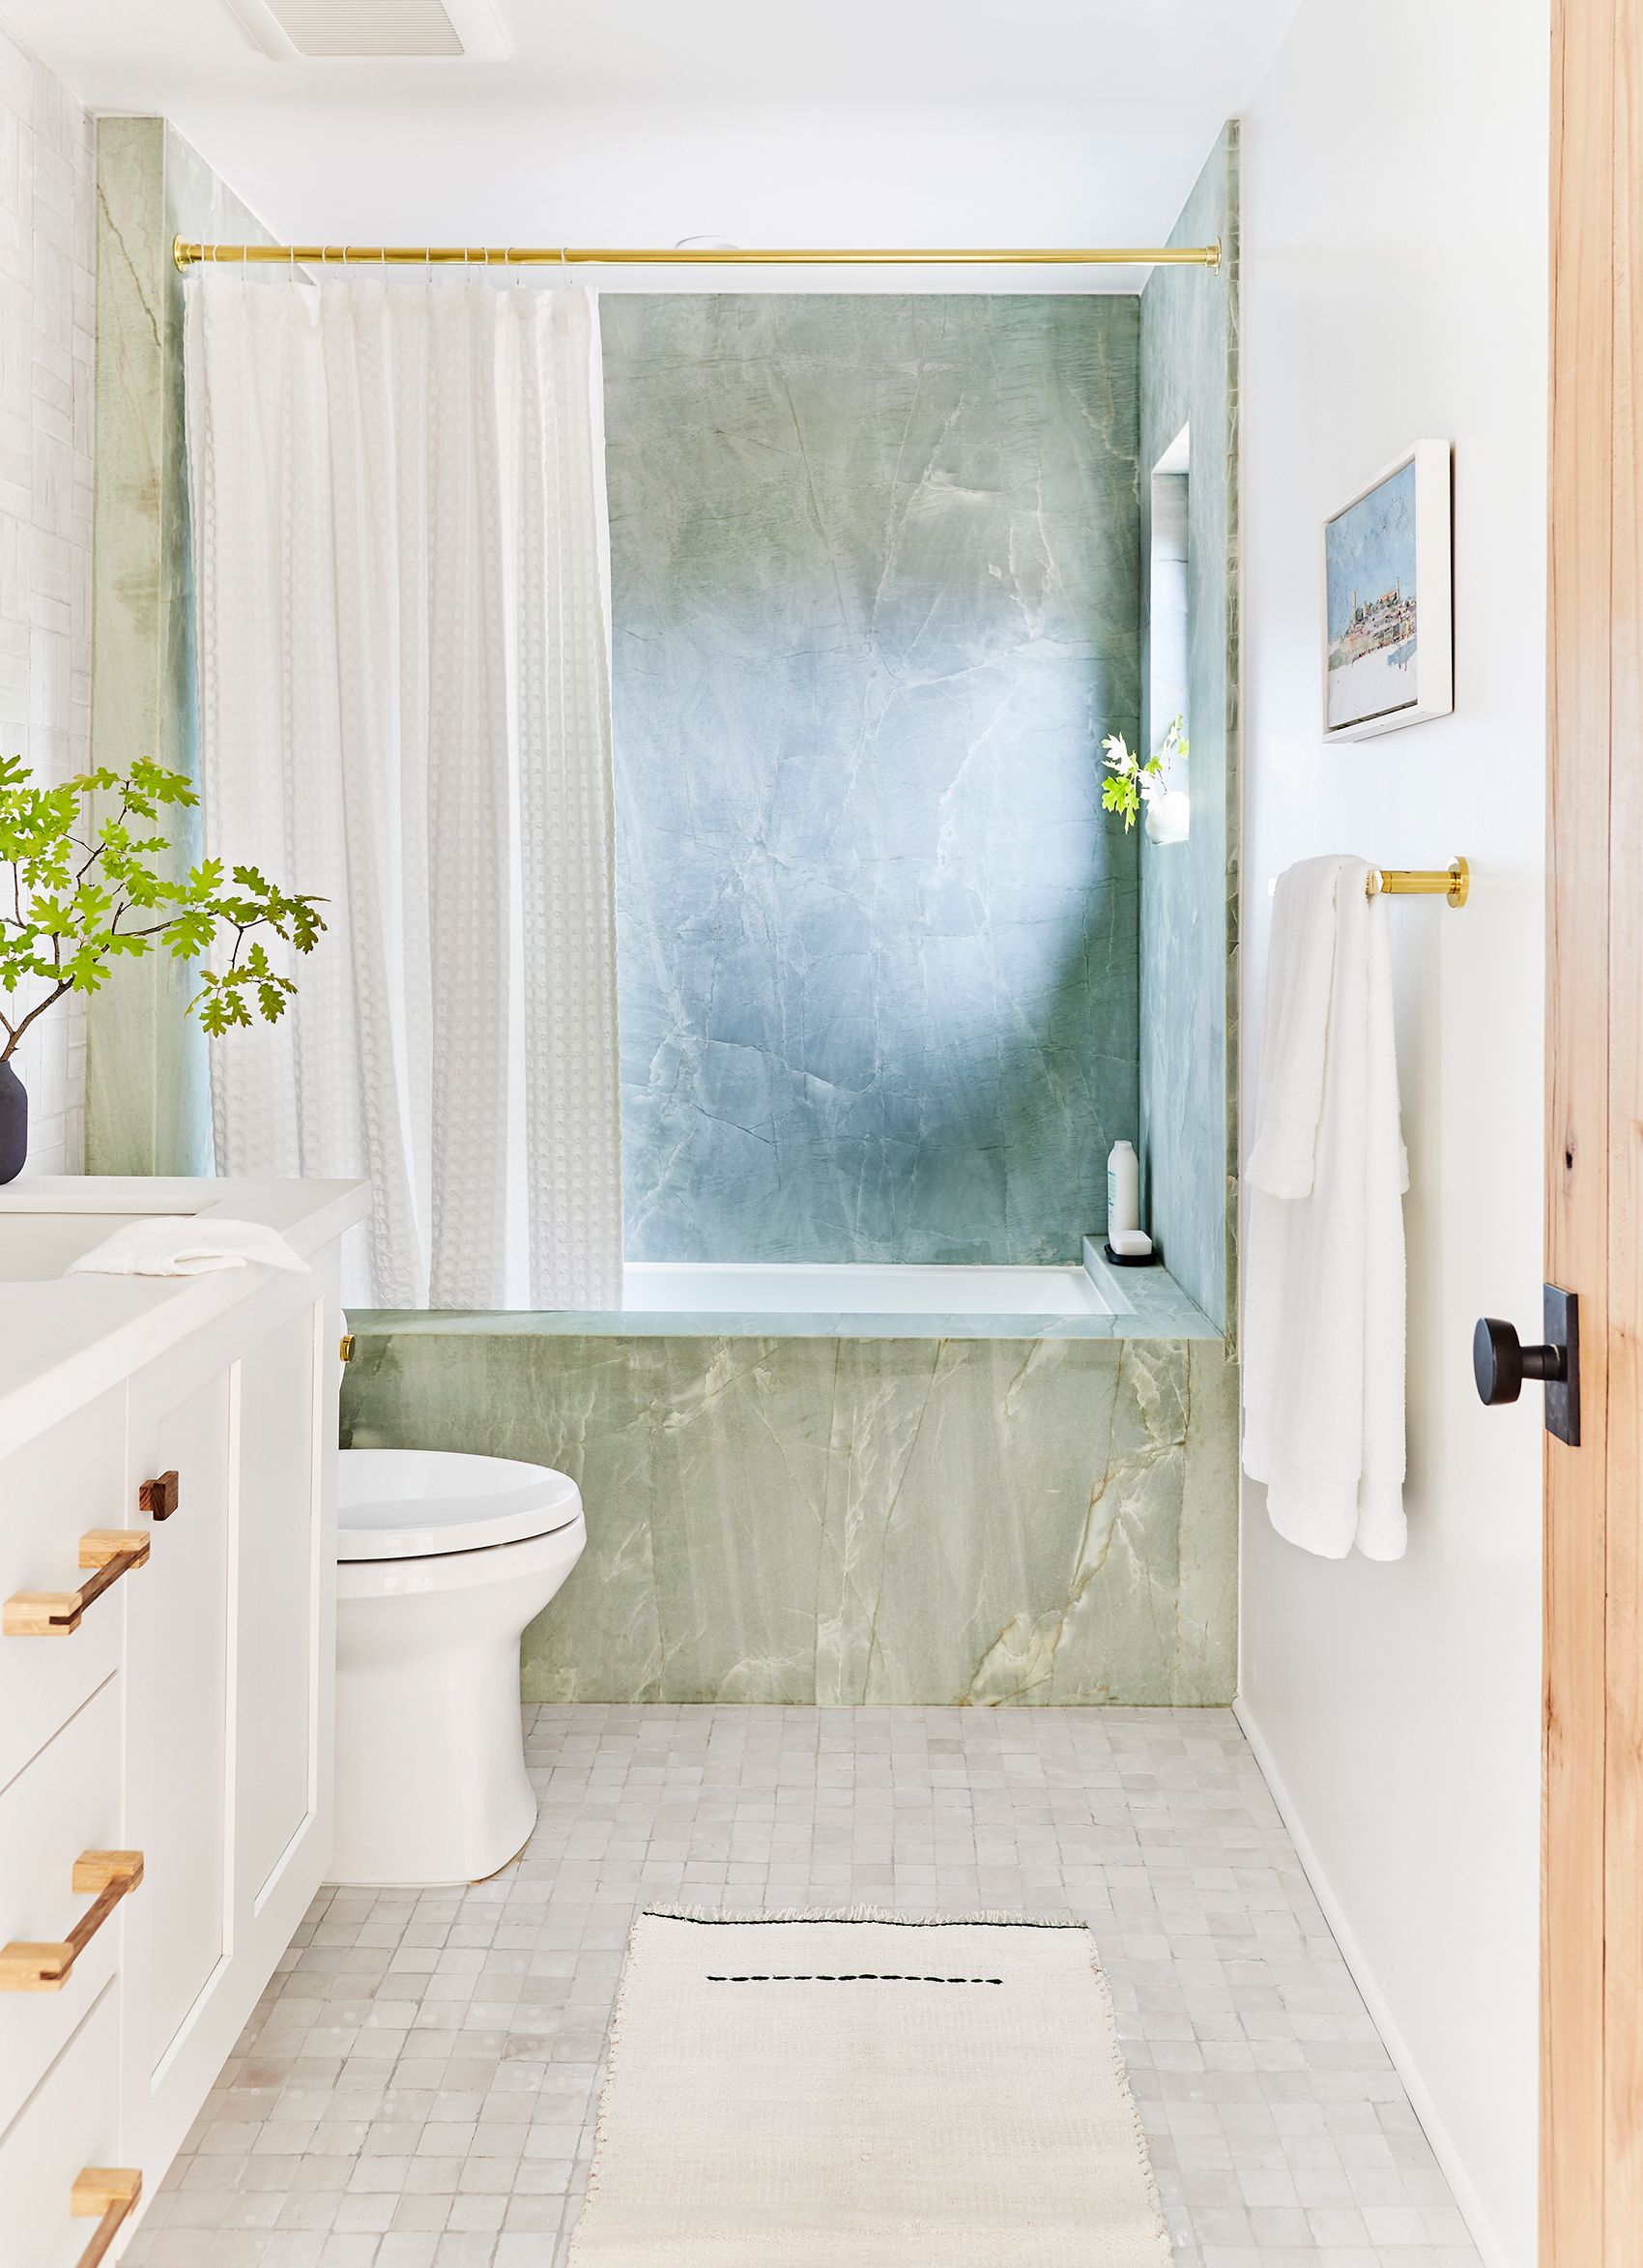 55 Bathroom Tile Ideas Bath, Pictures Of Tiled Small Bathrooms